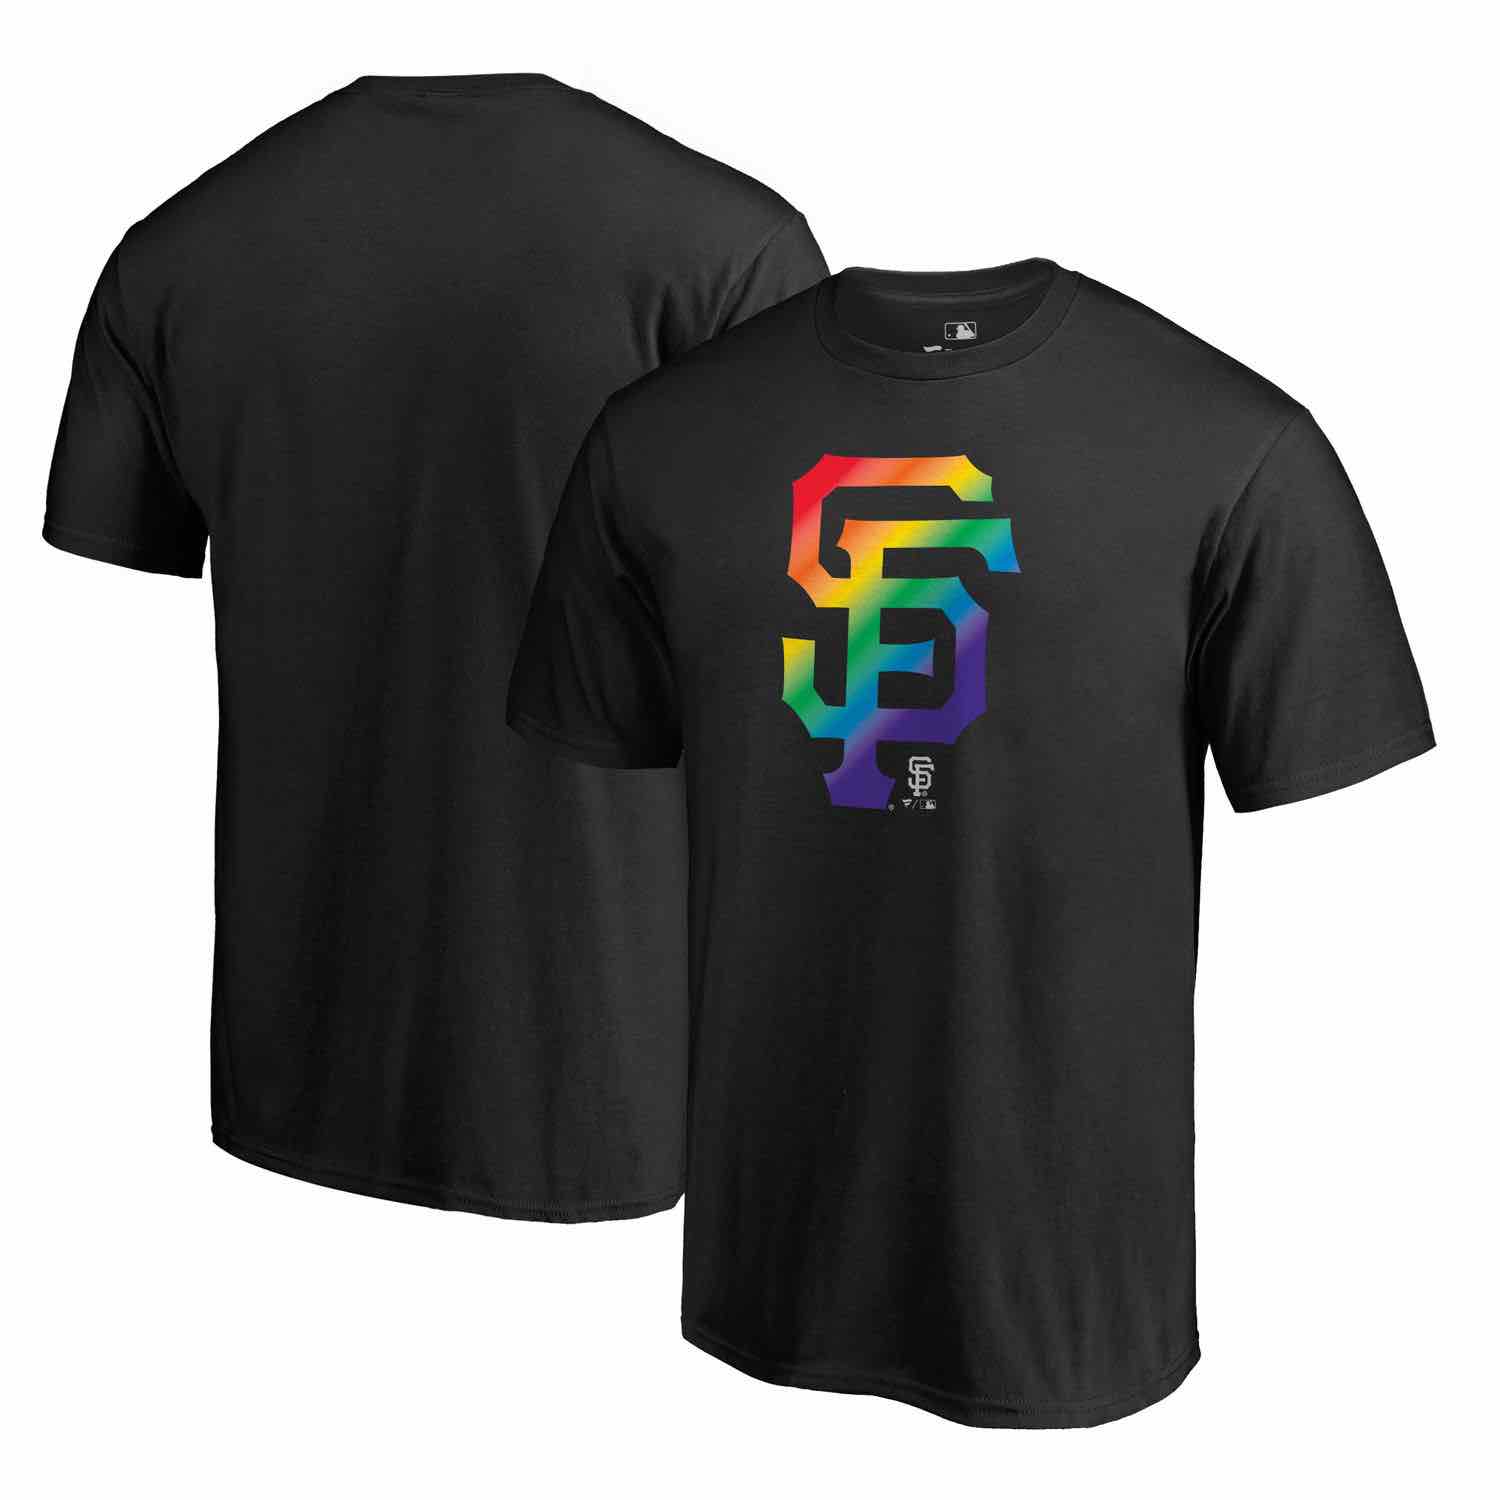 Mens San Francisco Giants Fanatics Branded Pride Black T-Shirt